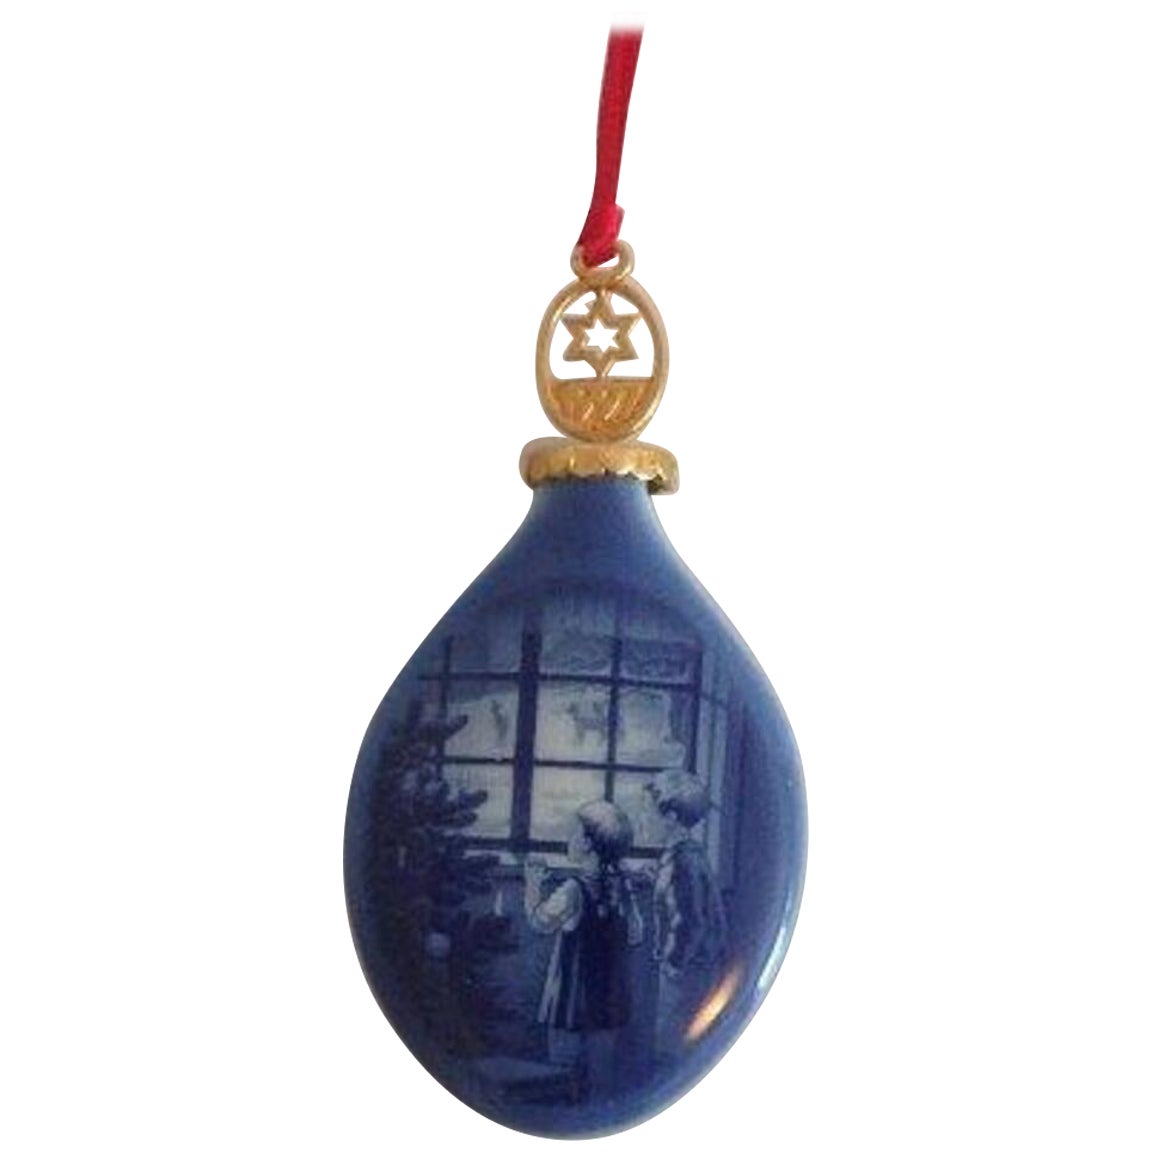 Bing & Grondahl Drop Ornament 1997 For Sale